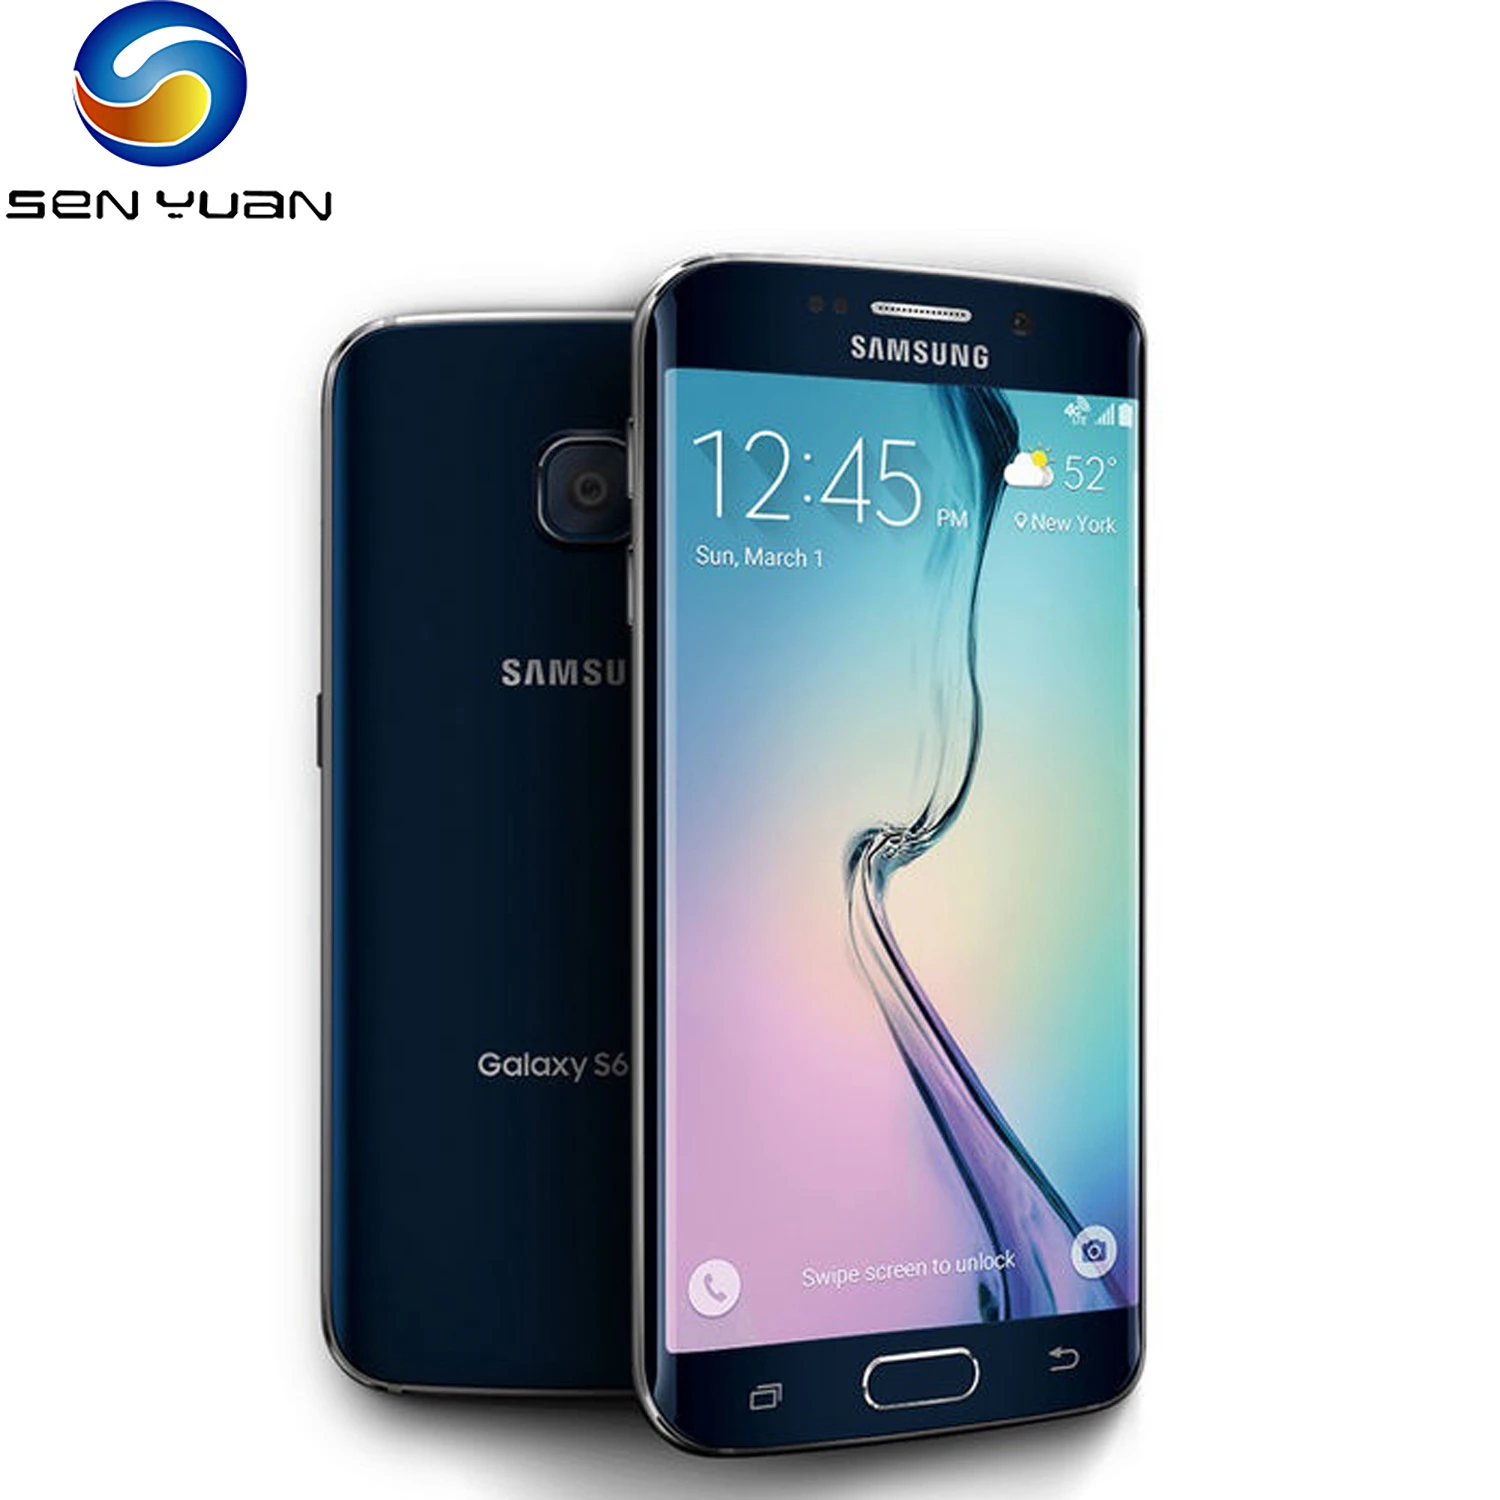 refurbished samsung phones Original Samsung Galaxy S6 Edge 4G LTE Mobile Phone Refurbished G925F Unlocked CellPhone 5.1" 3GB 32GB Android 7.0 SmartPhone refurbished iphone xr